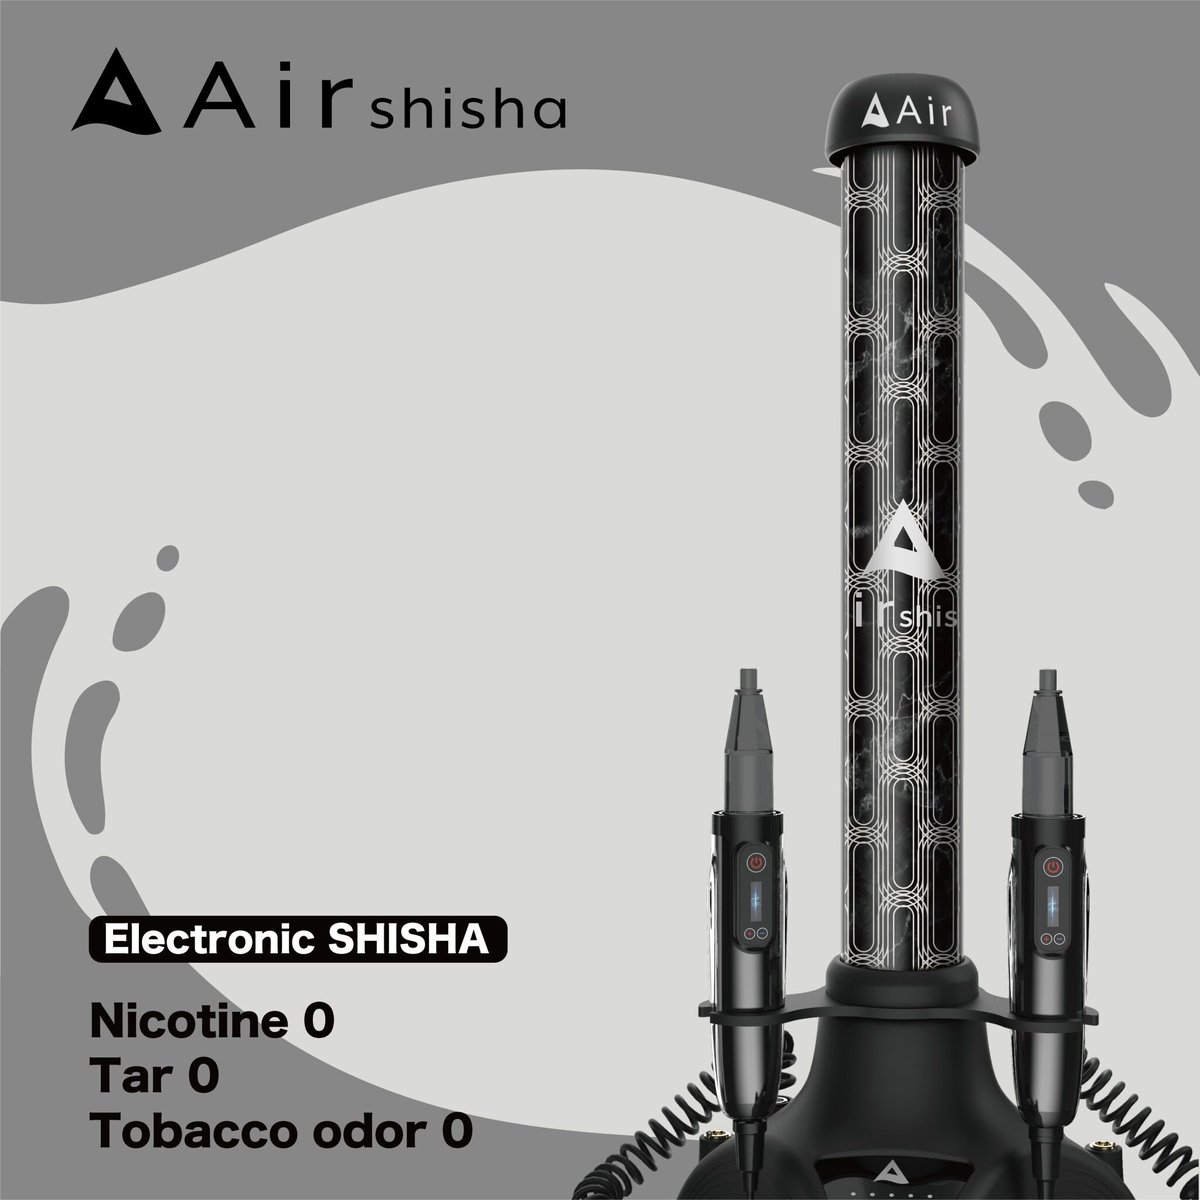 Air shisha AS01-B5エアシーシャエアーシーシャ置き型電子シーシャ